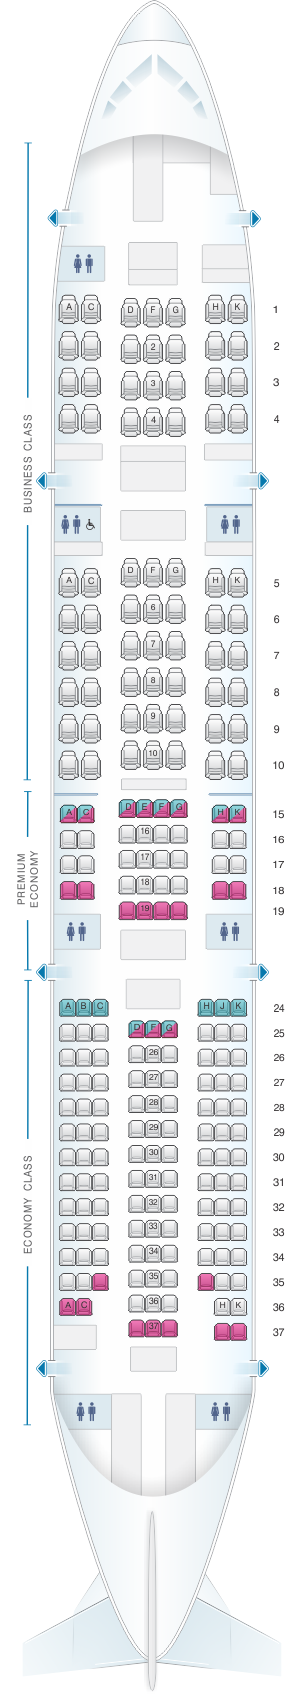 Seat Map Ana All Nippon Airways Boeing B777 200er 223pax Seatmaestro